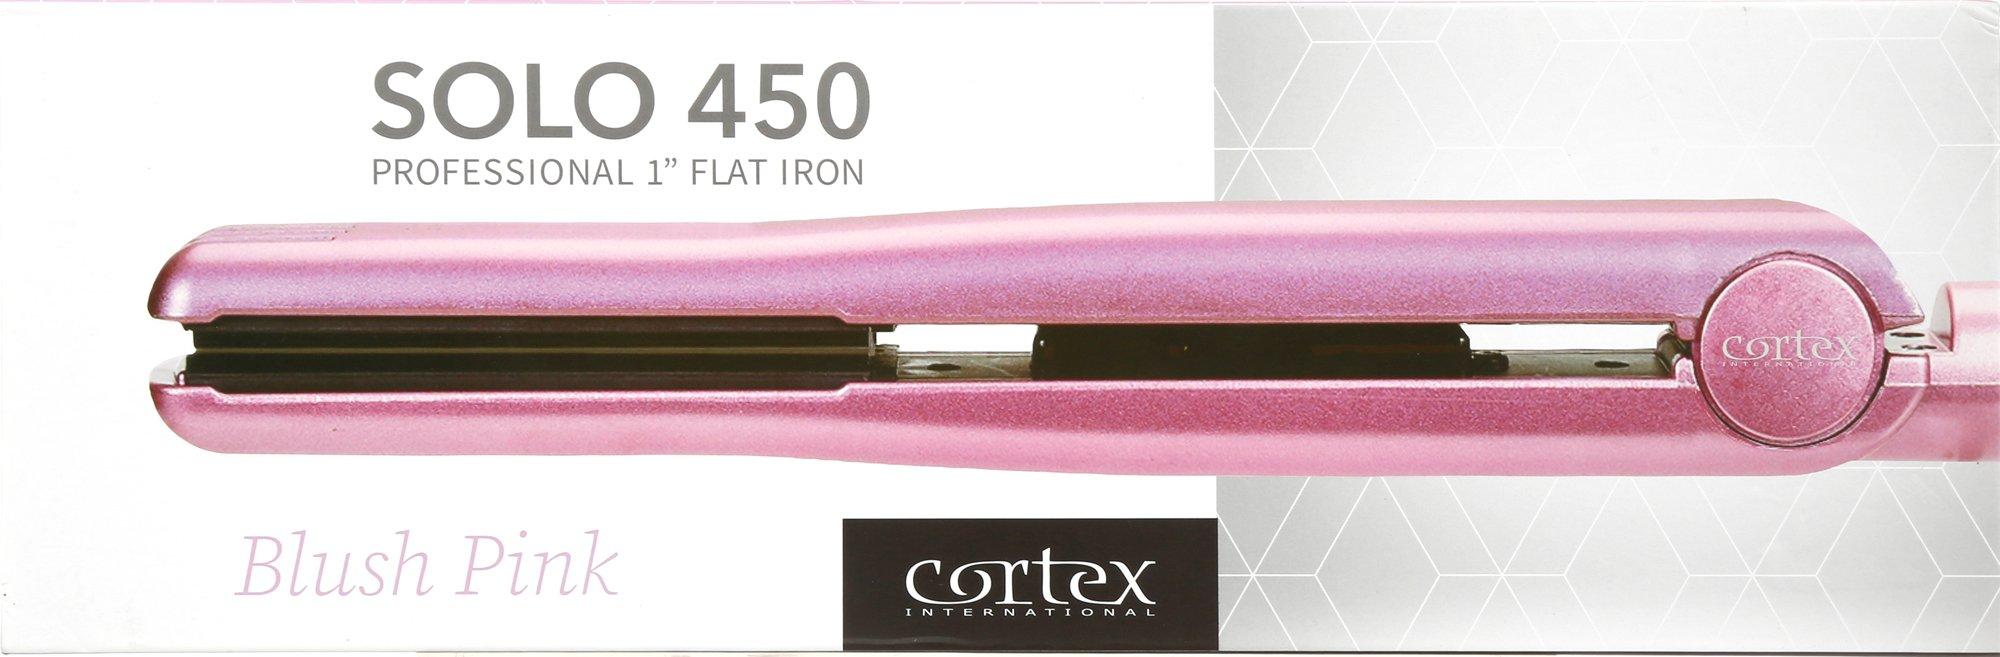 Solo 450 Professional Flat Iron